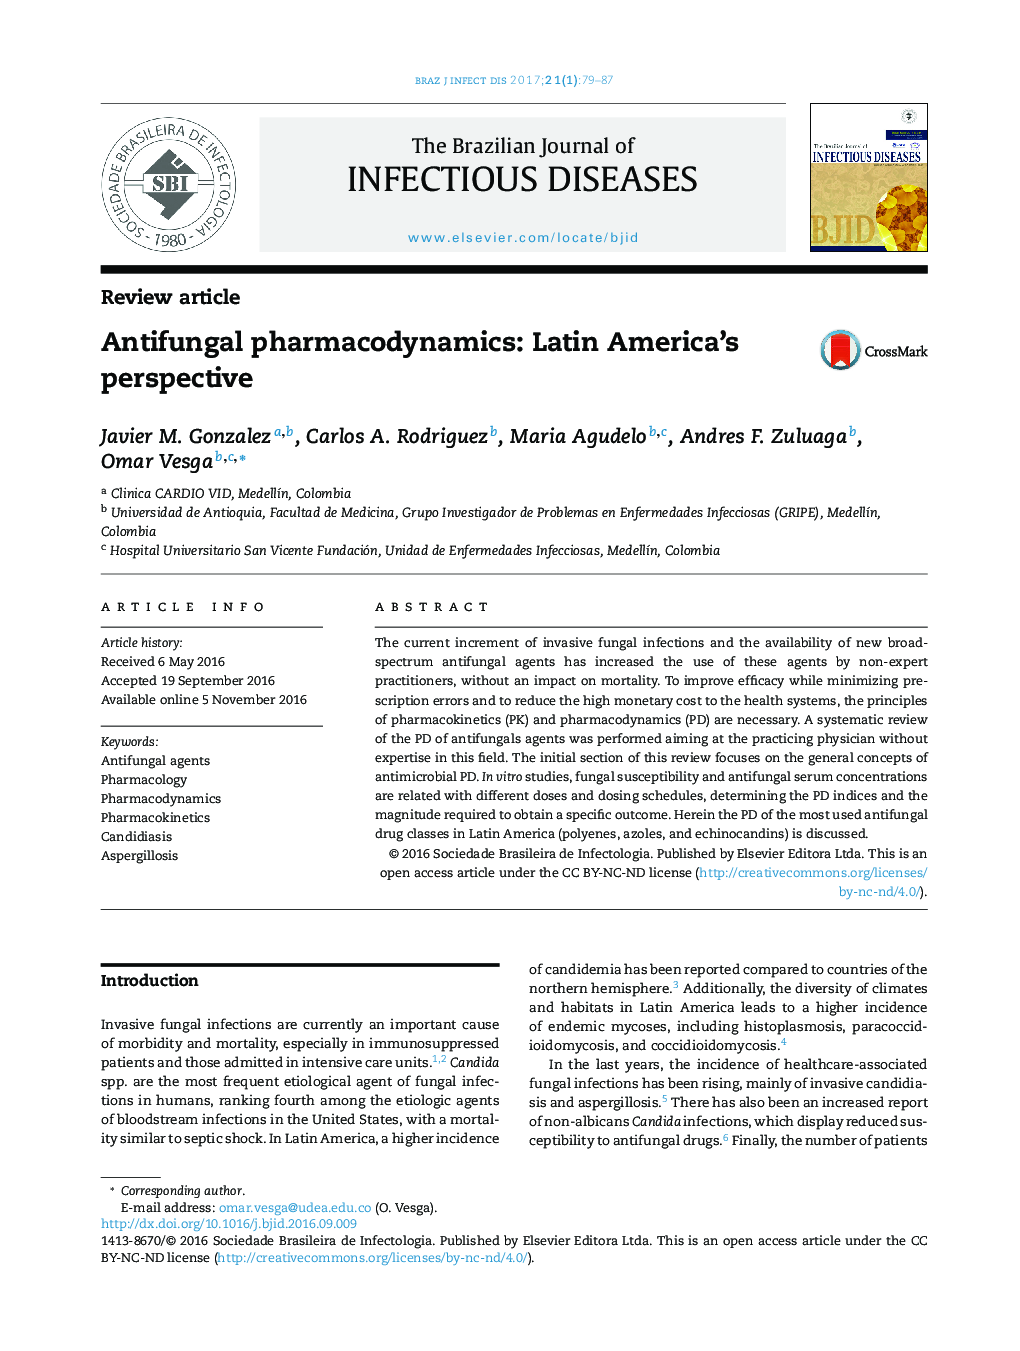 Antifungal pharmacodynamics: Latin America's perspective